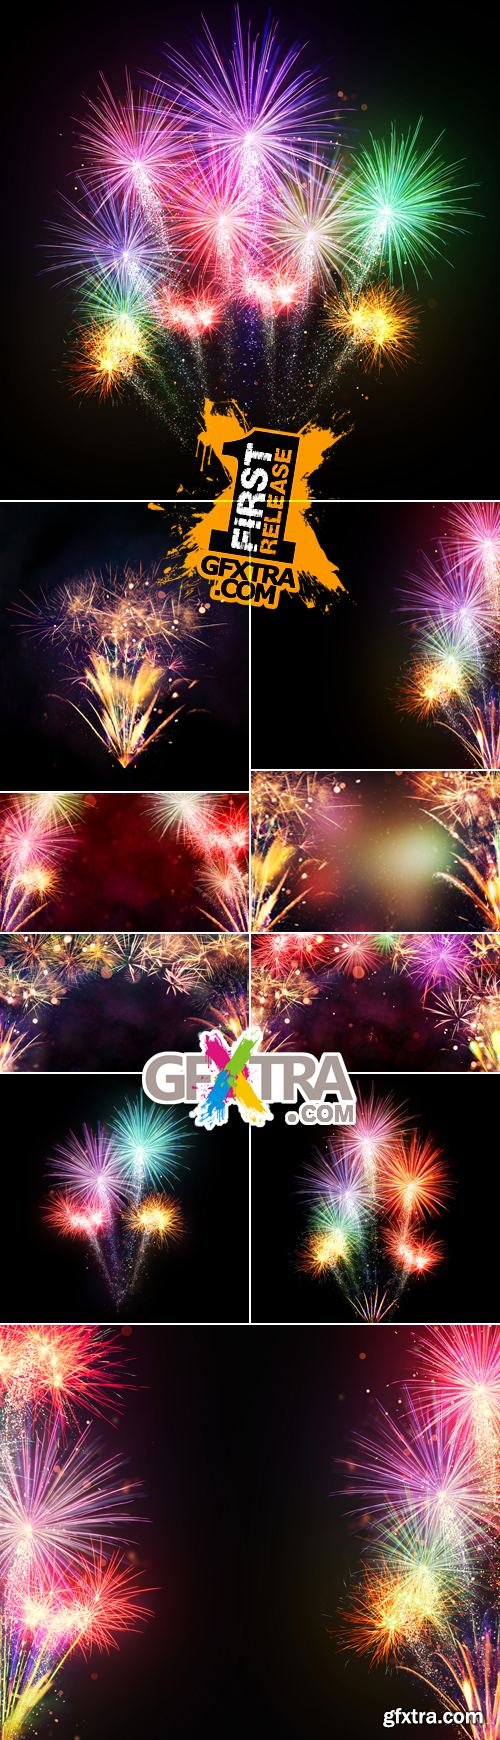 Stock Photo - Fireworks Backgrounds 2